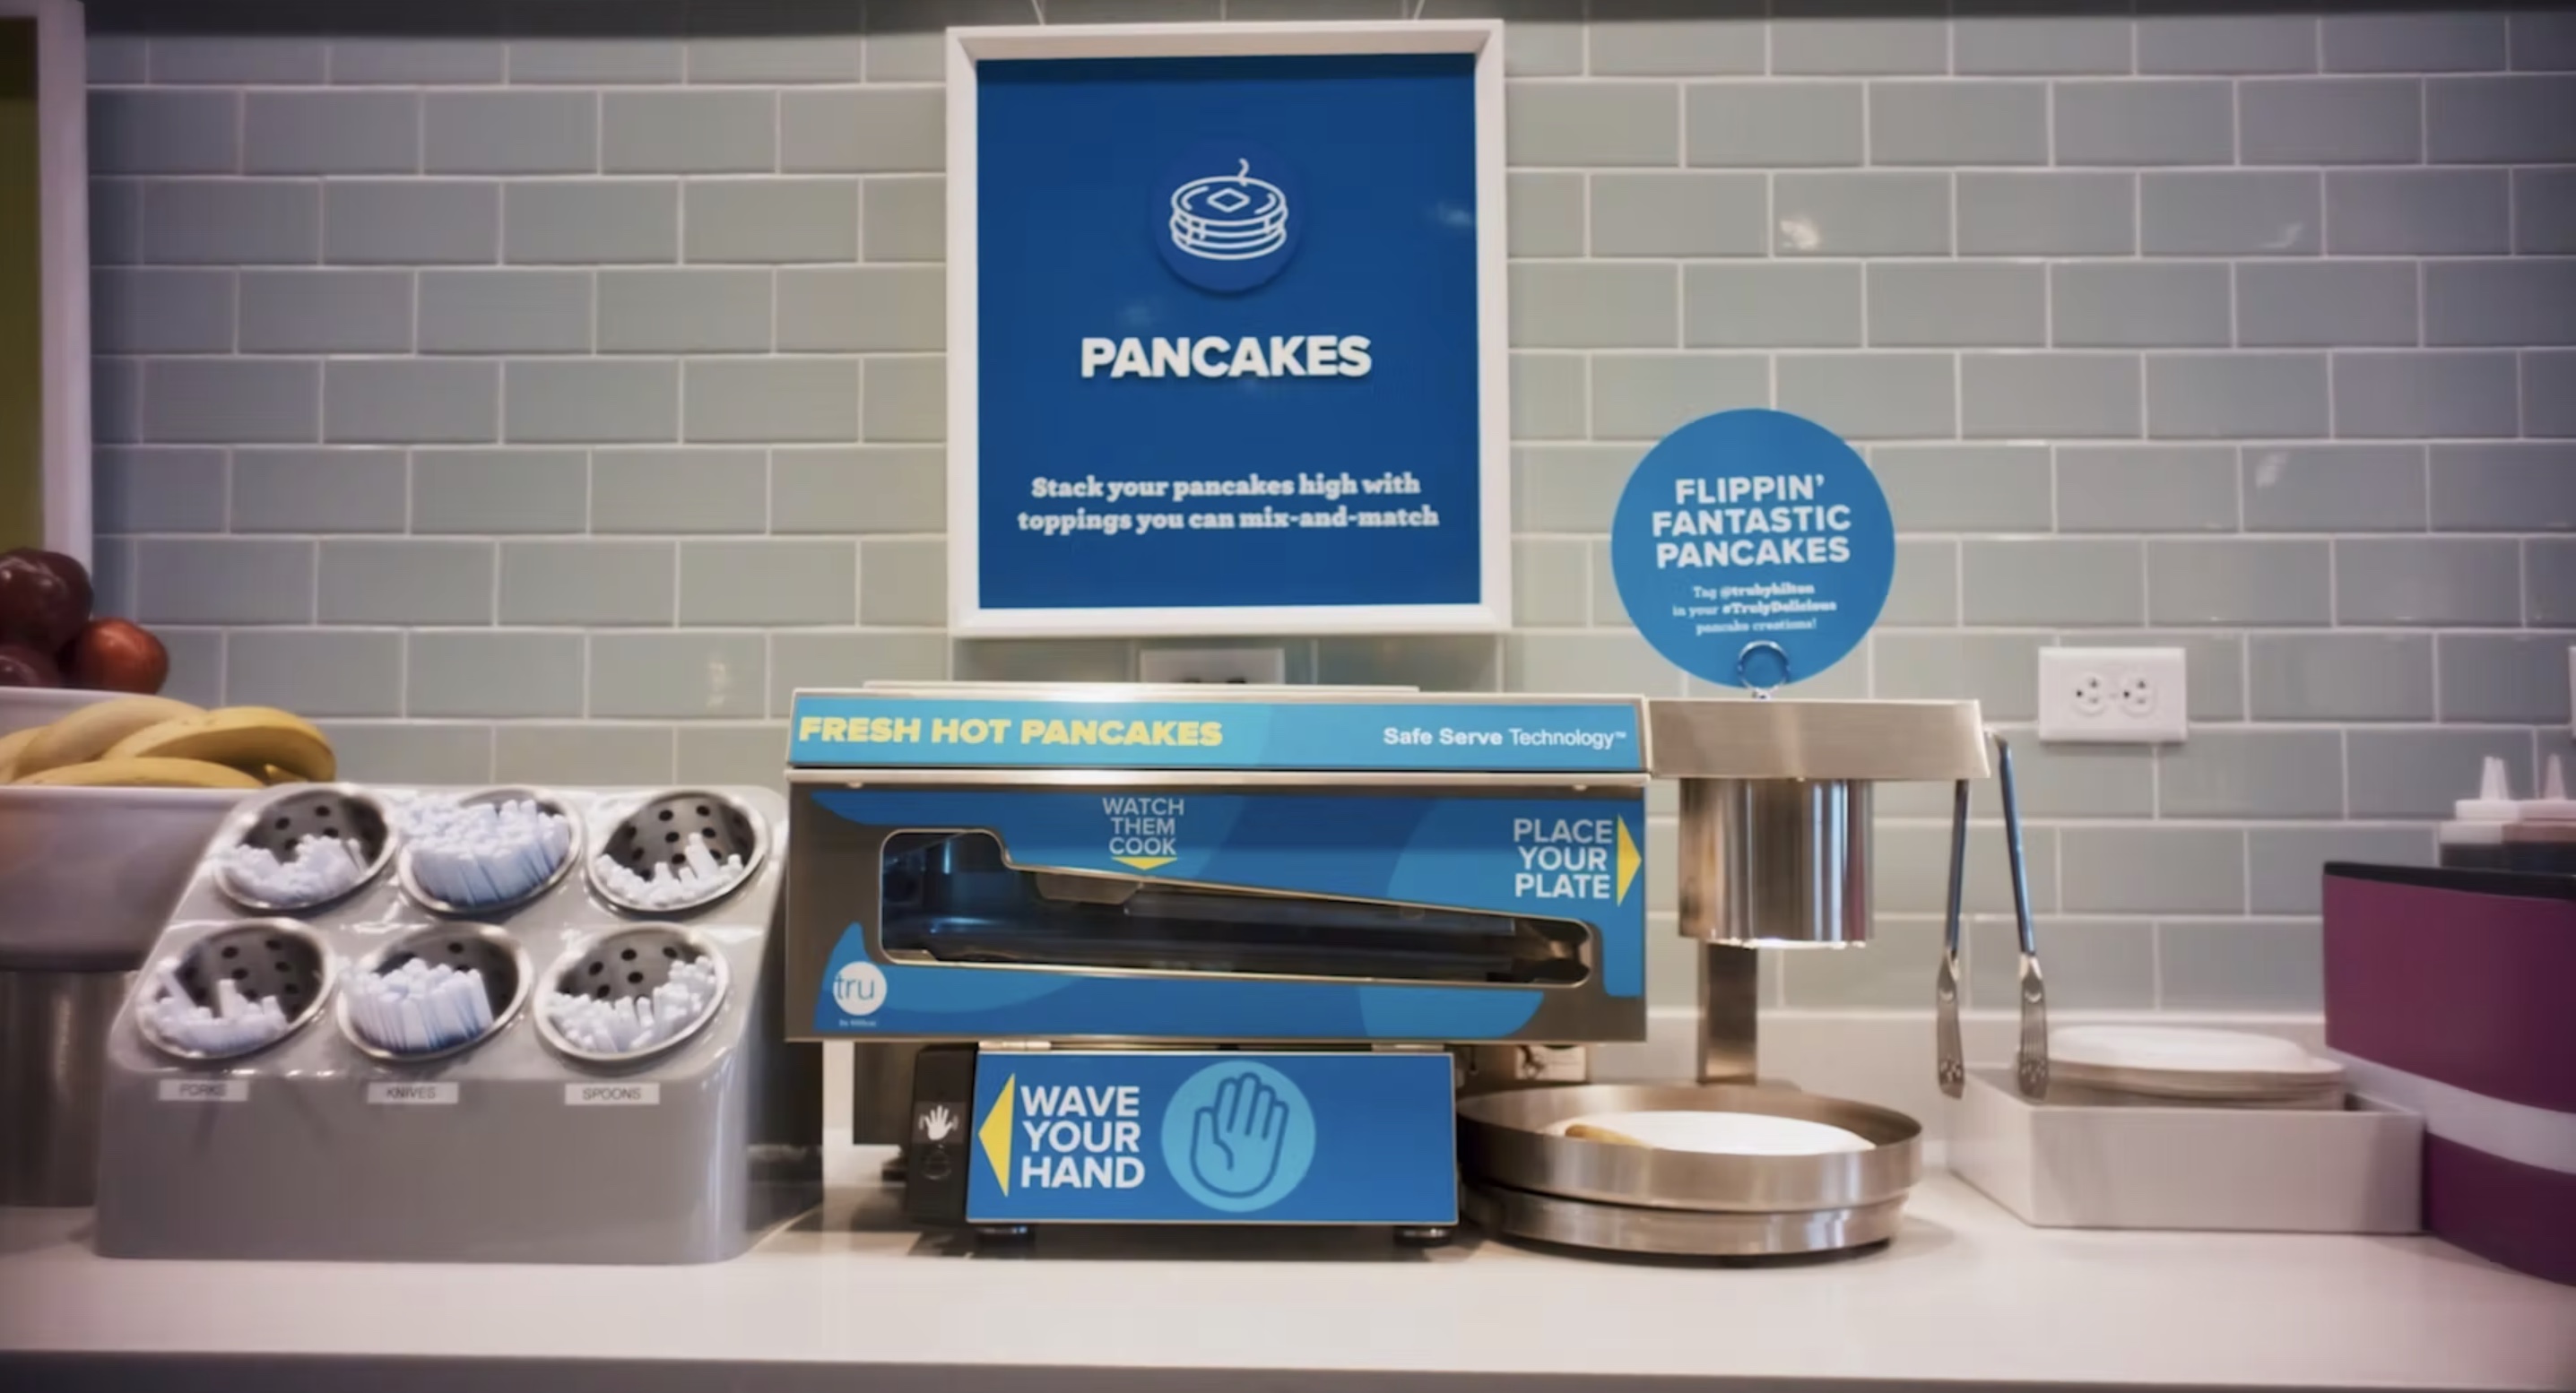 Tru by Hilton's New Automatic Pancake Maker – It's Magic